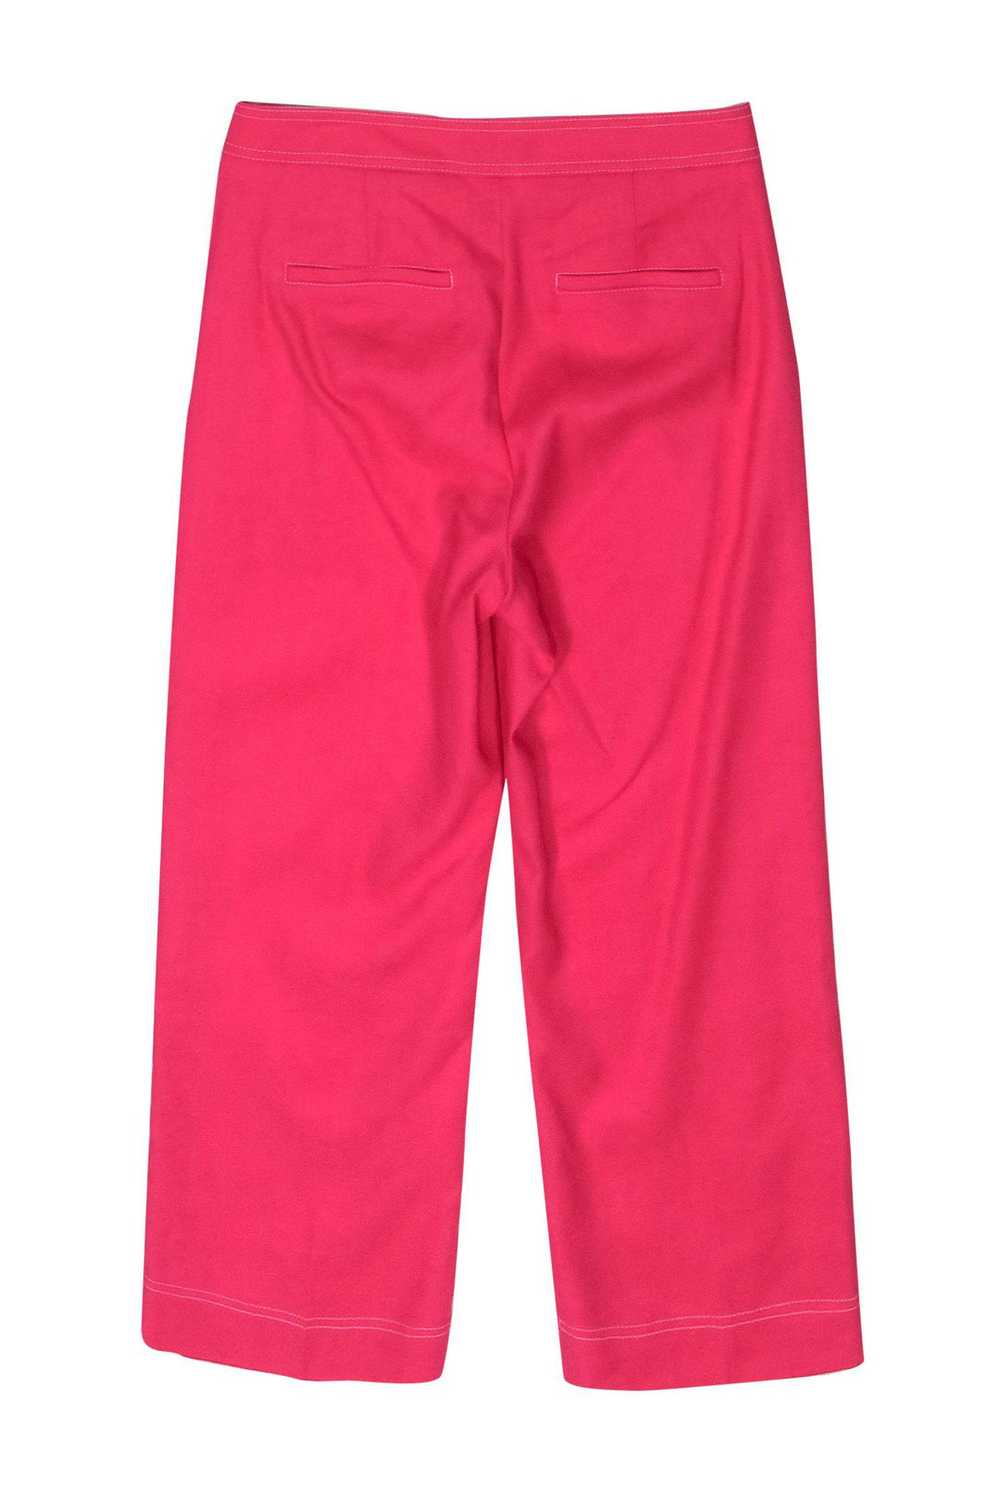 J.Crew - Hot Pink Wide Leg Pants w/ Button Detail… - image 2